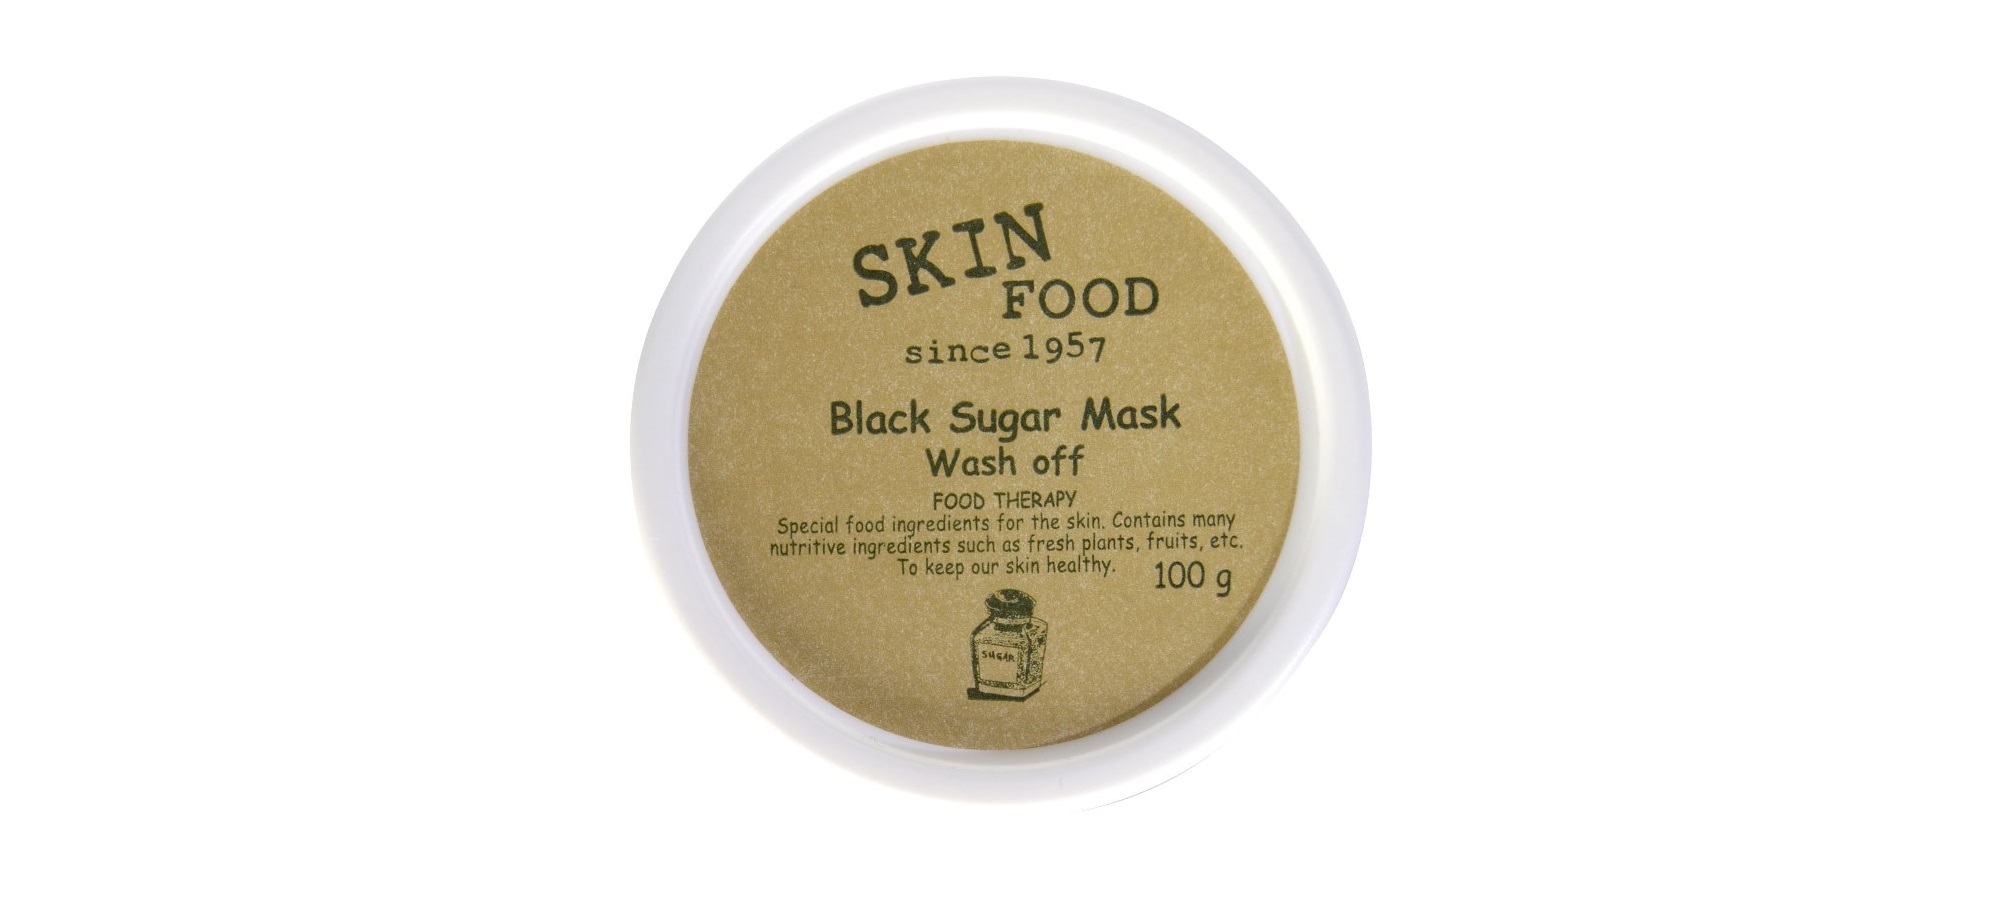 Skin Food Black Sugar mask